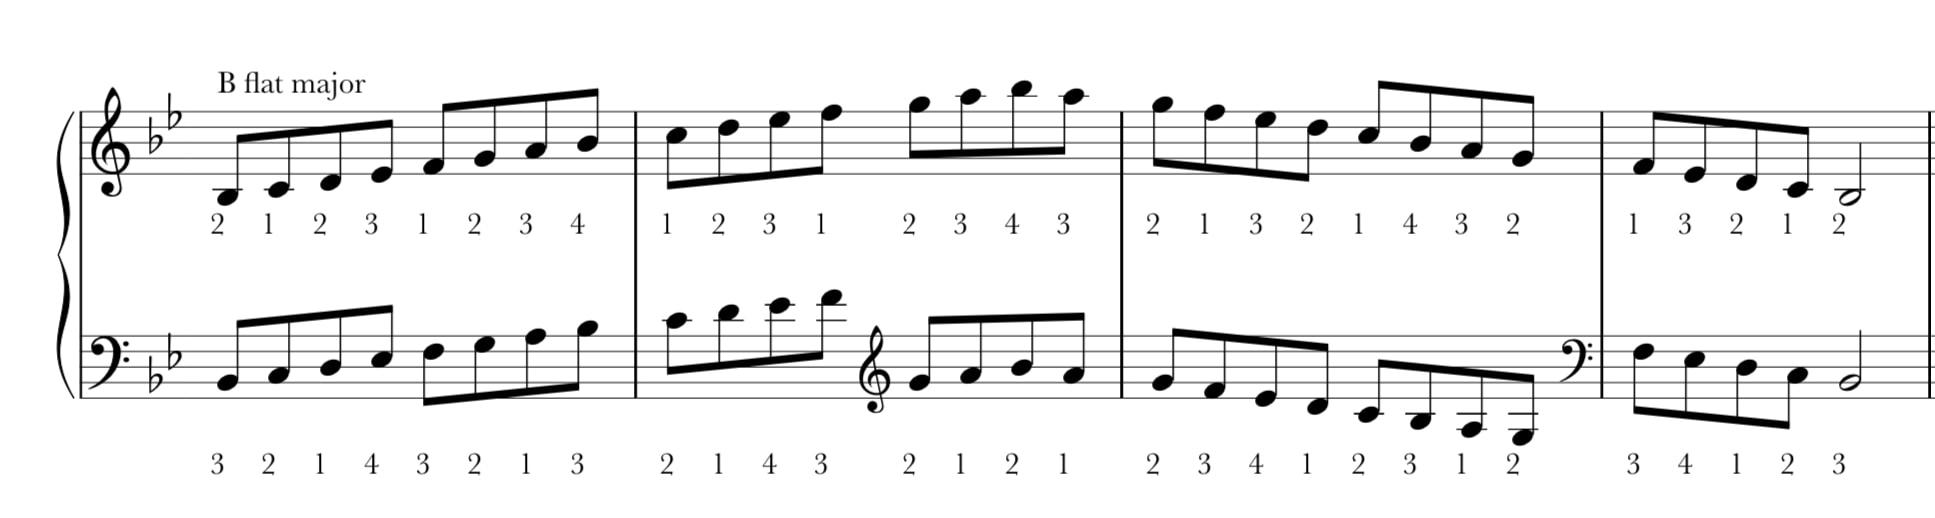 piano scales b flat minor